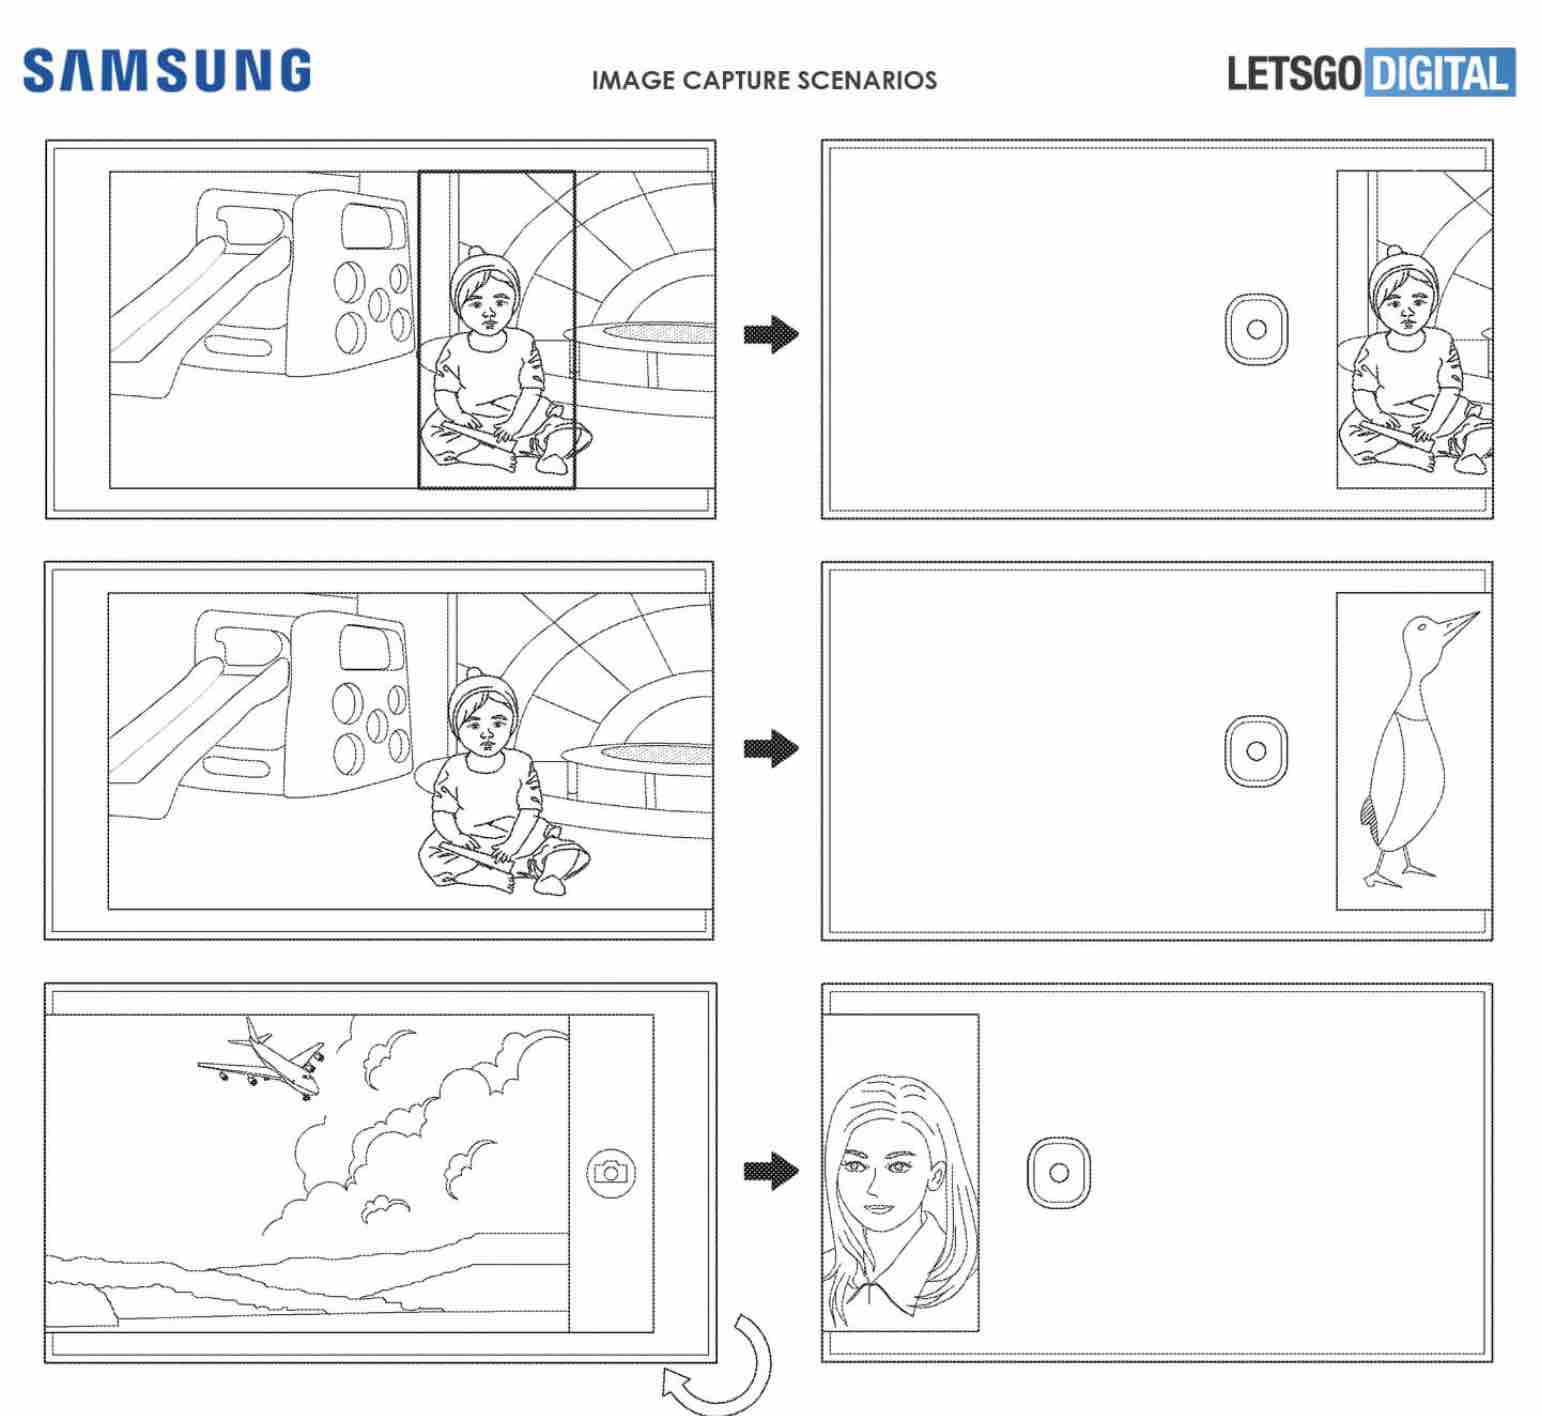 Samsung new patent smartphone